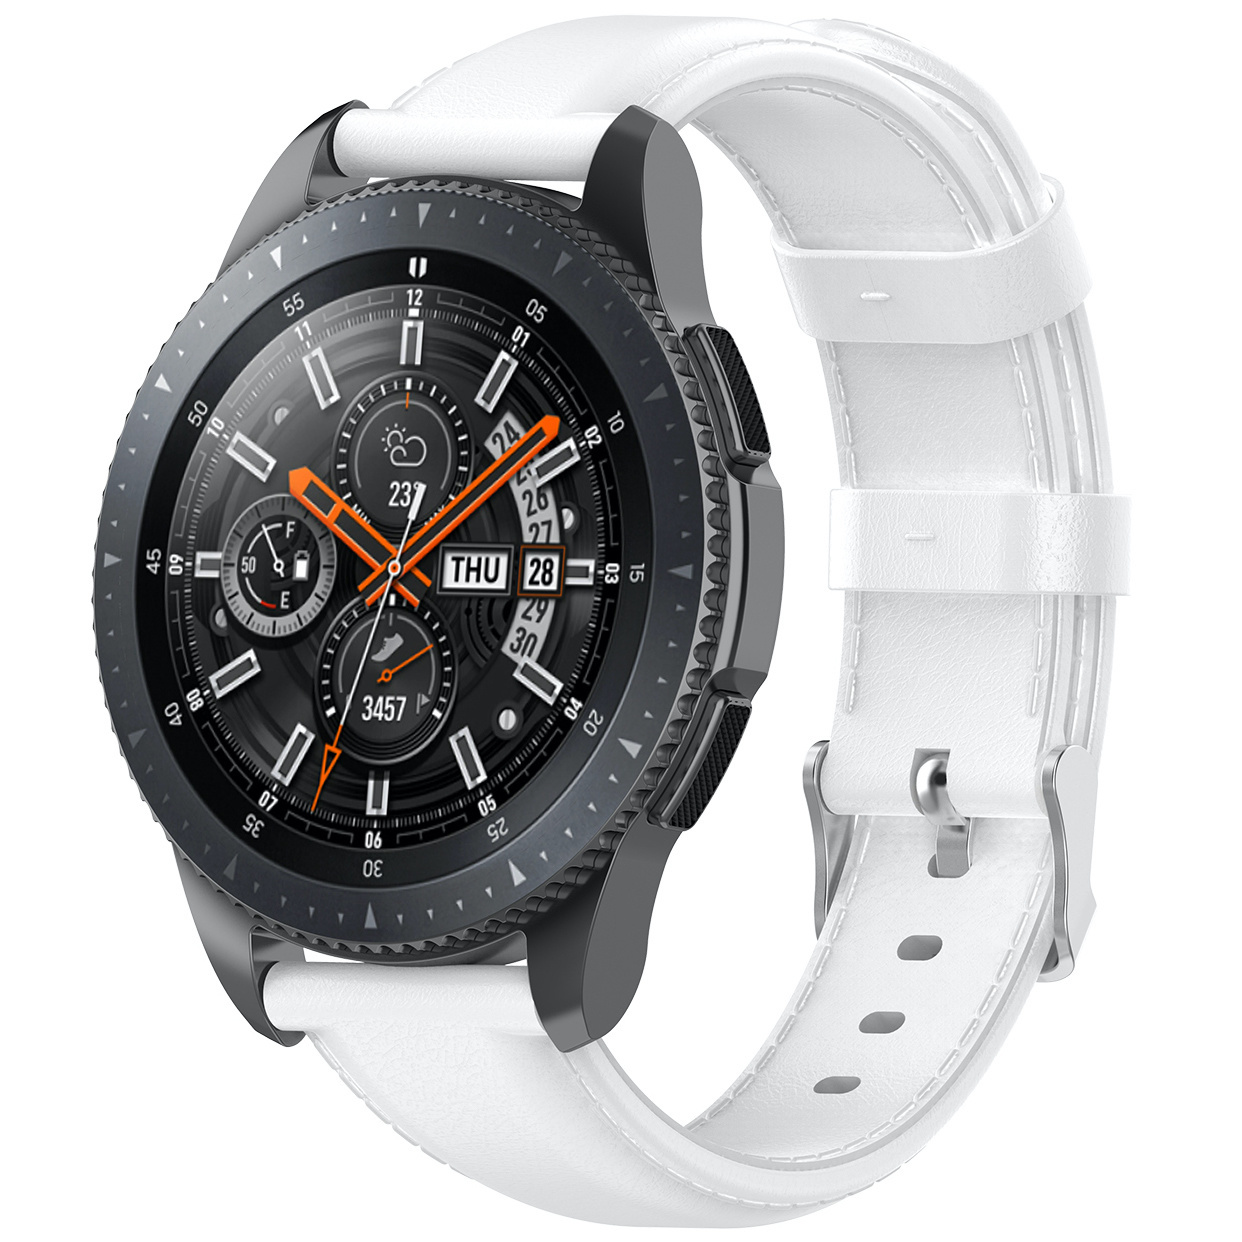 Cinturino in pelle per Huawei Watch GT - bianco